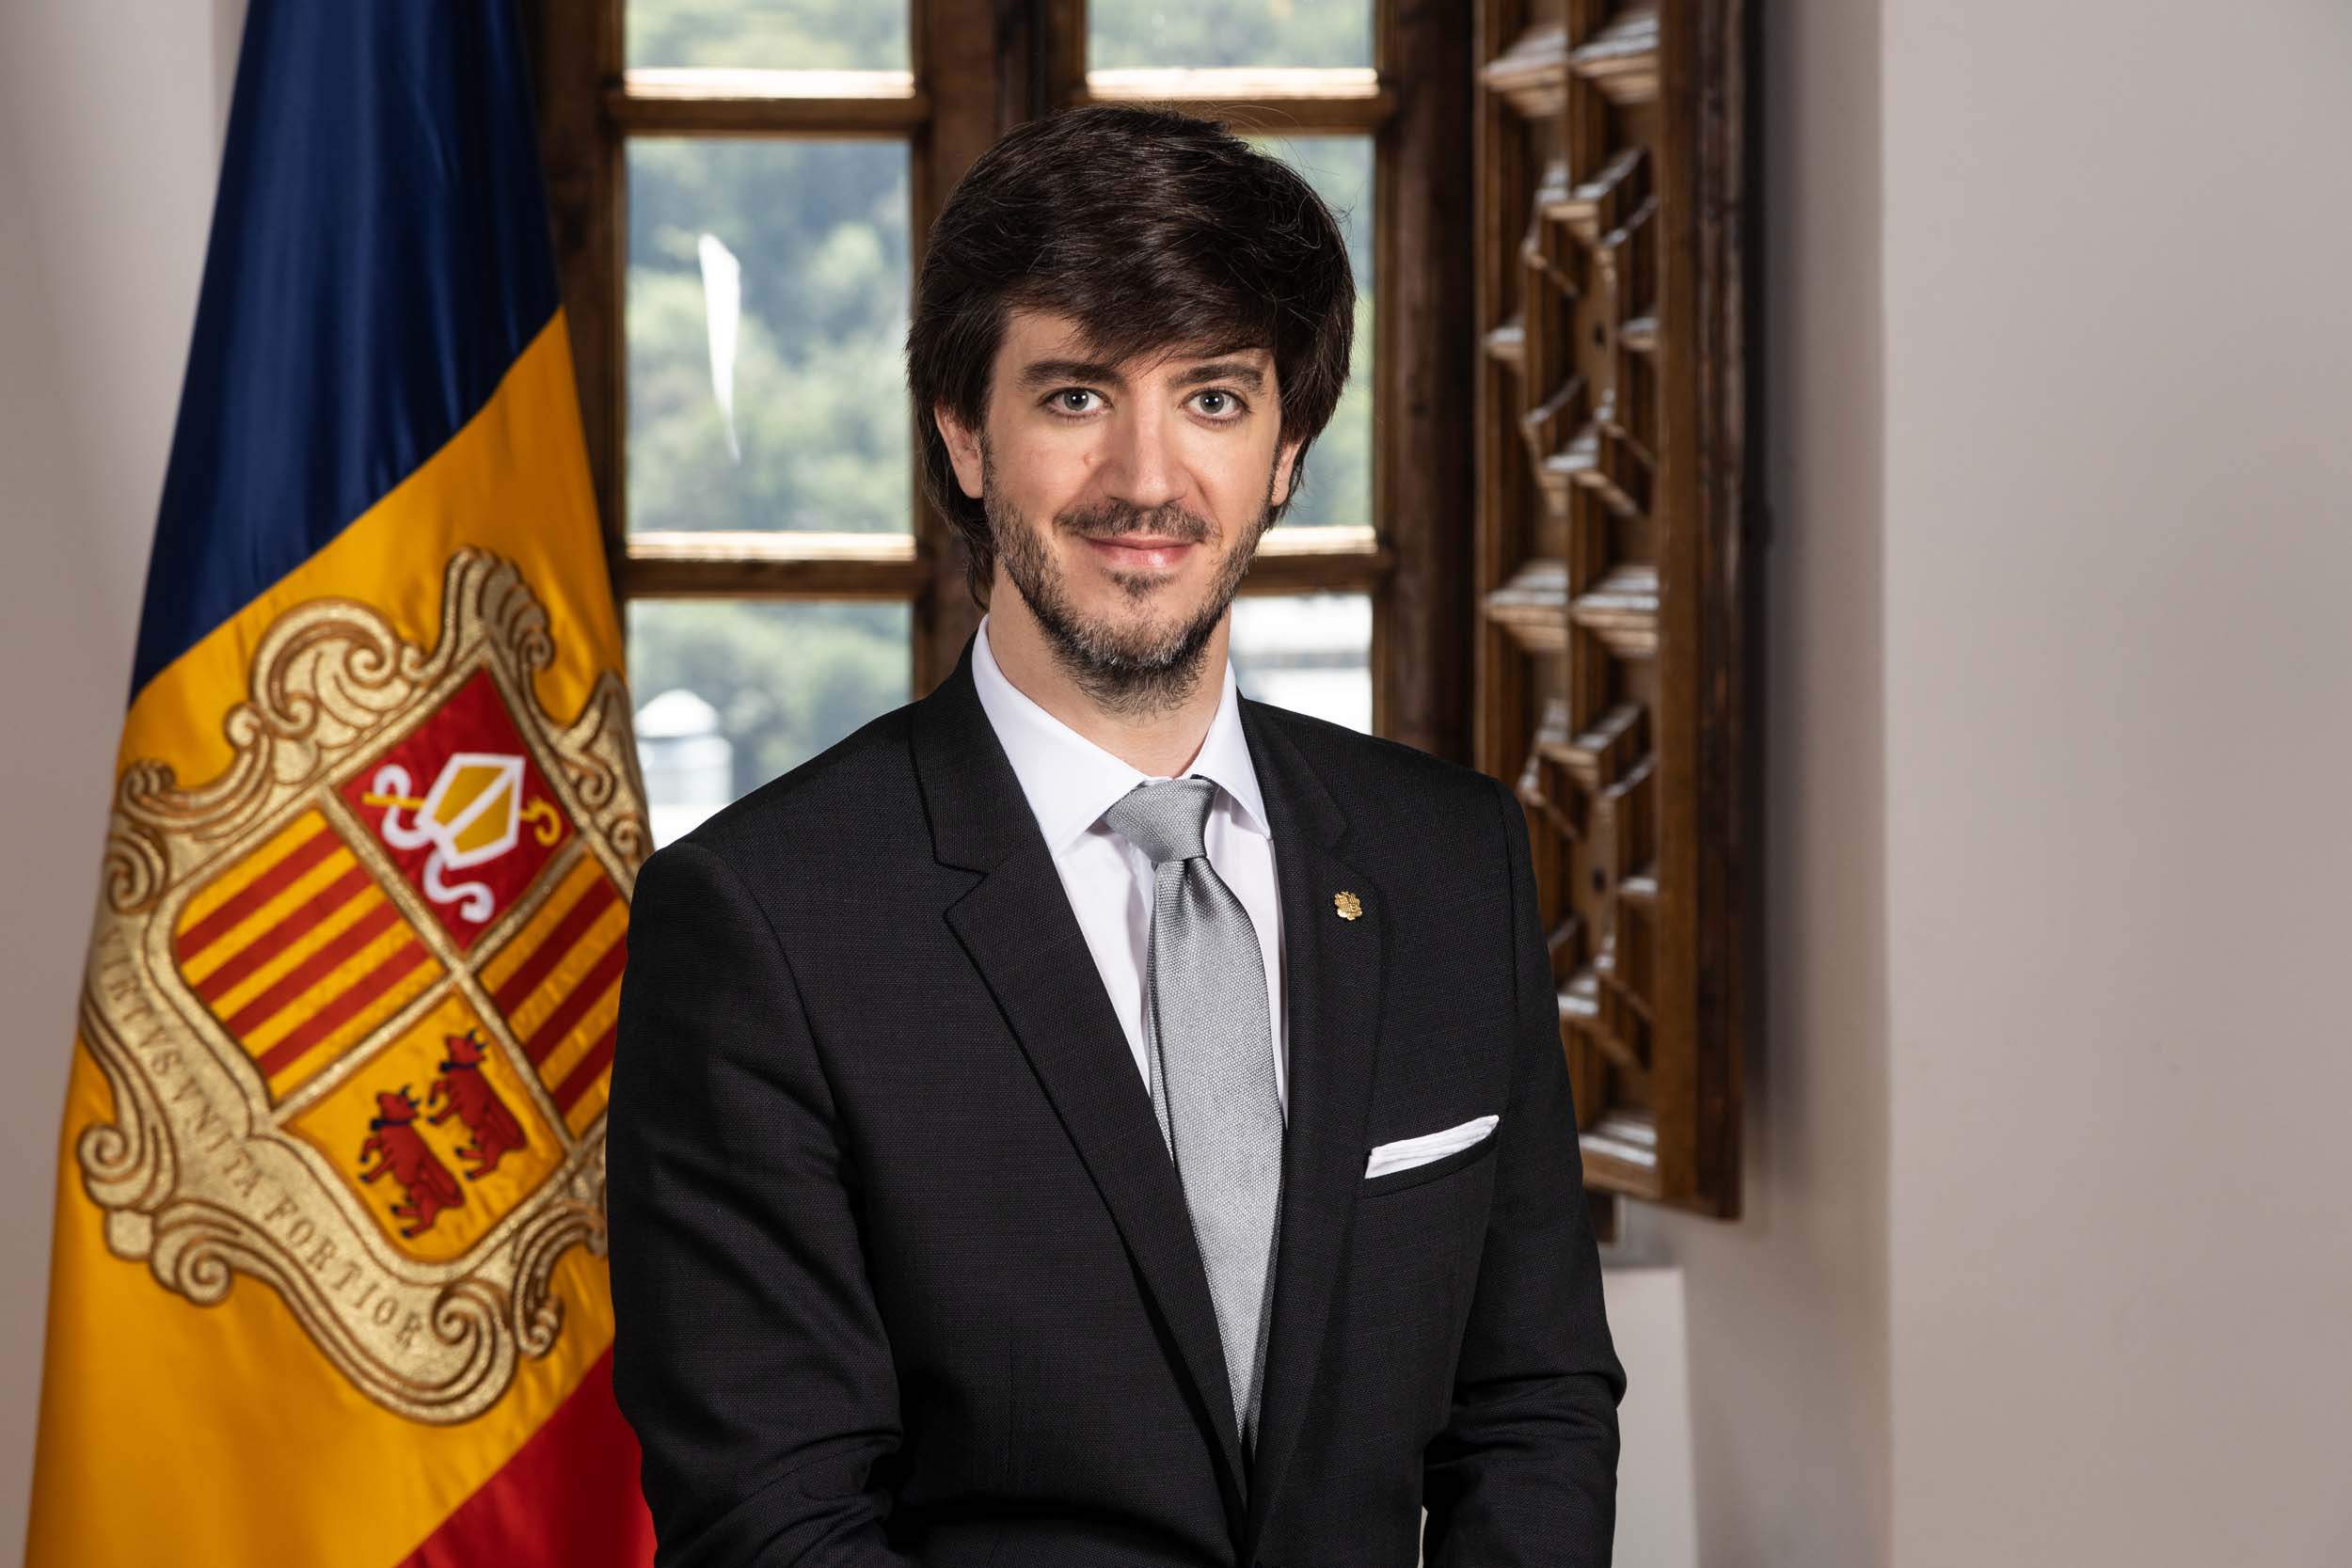 Carles Enseñat Reig síndic general consell general Andorra